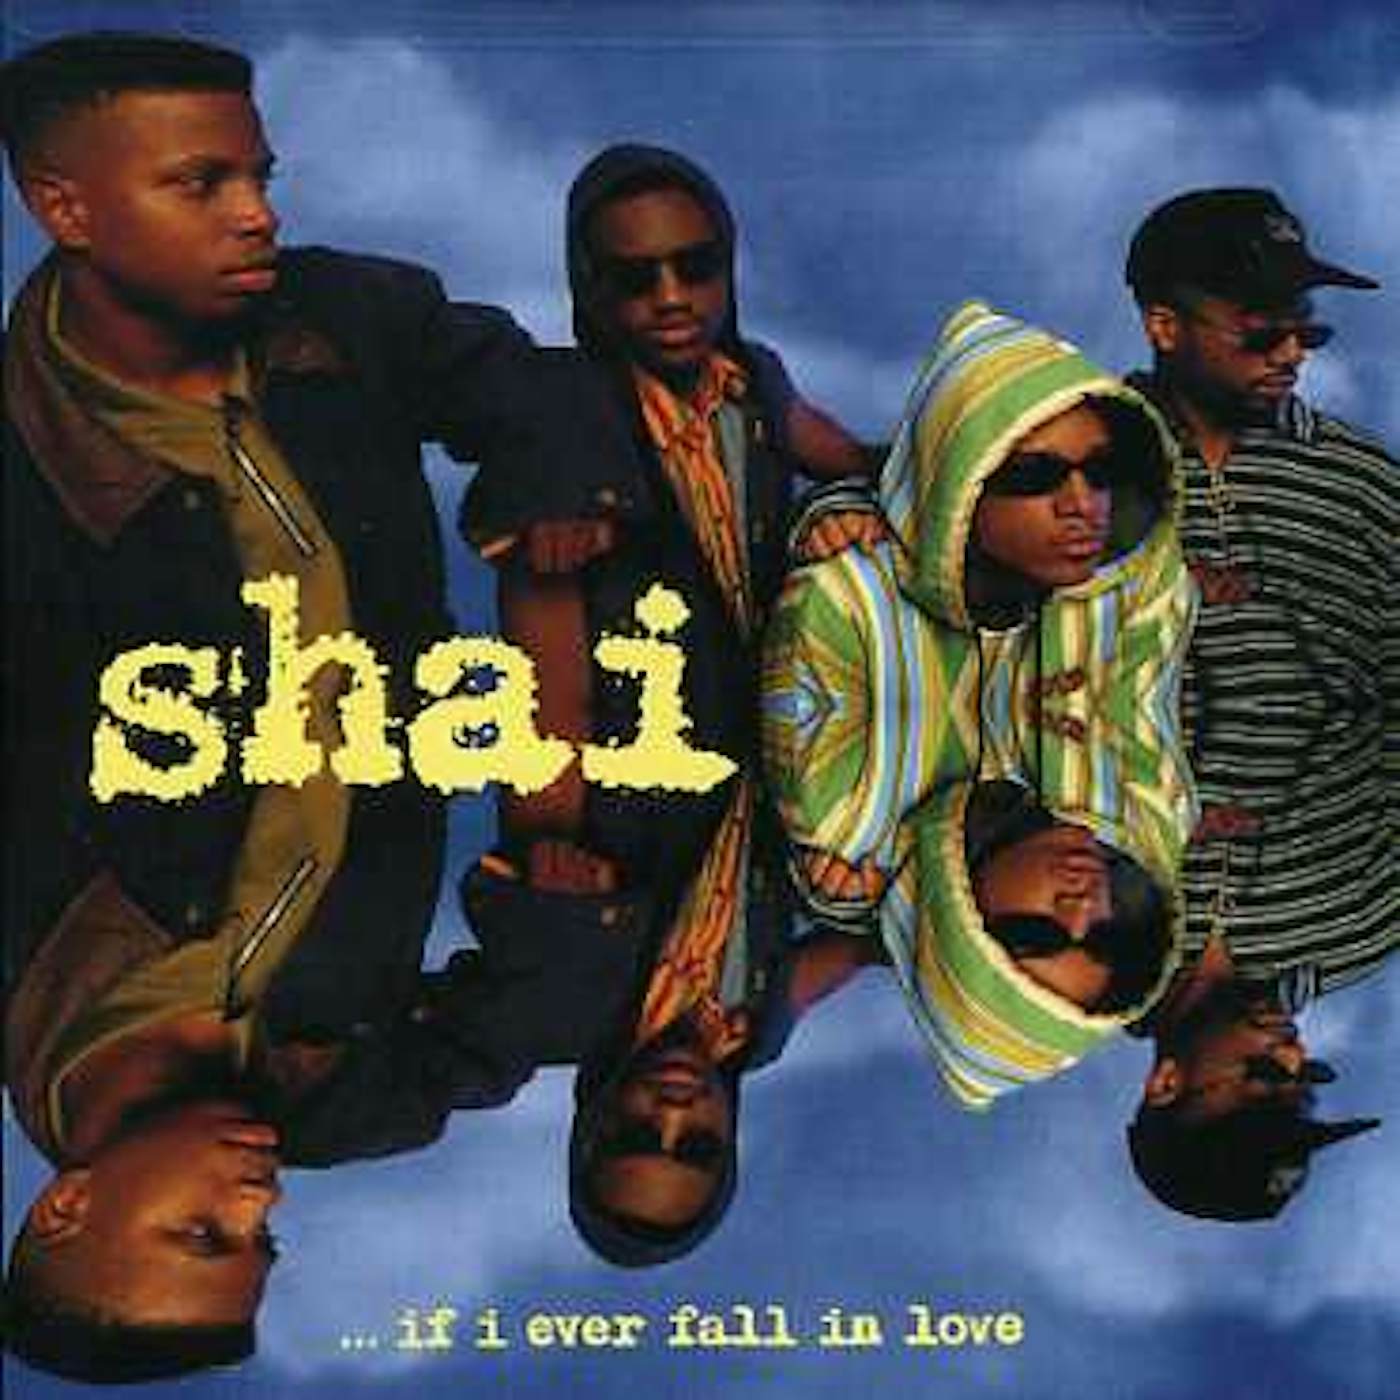 Shai IF I EVER FALL IN LOVE CD